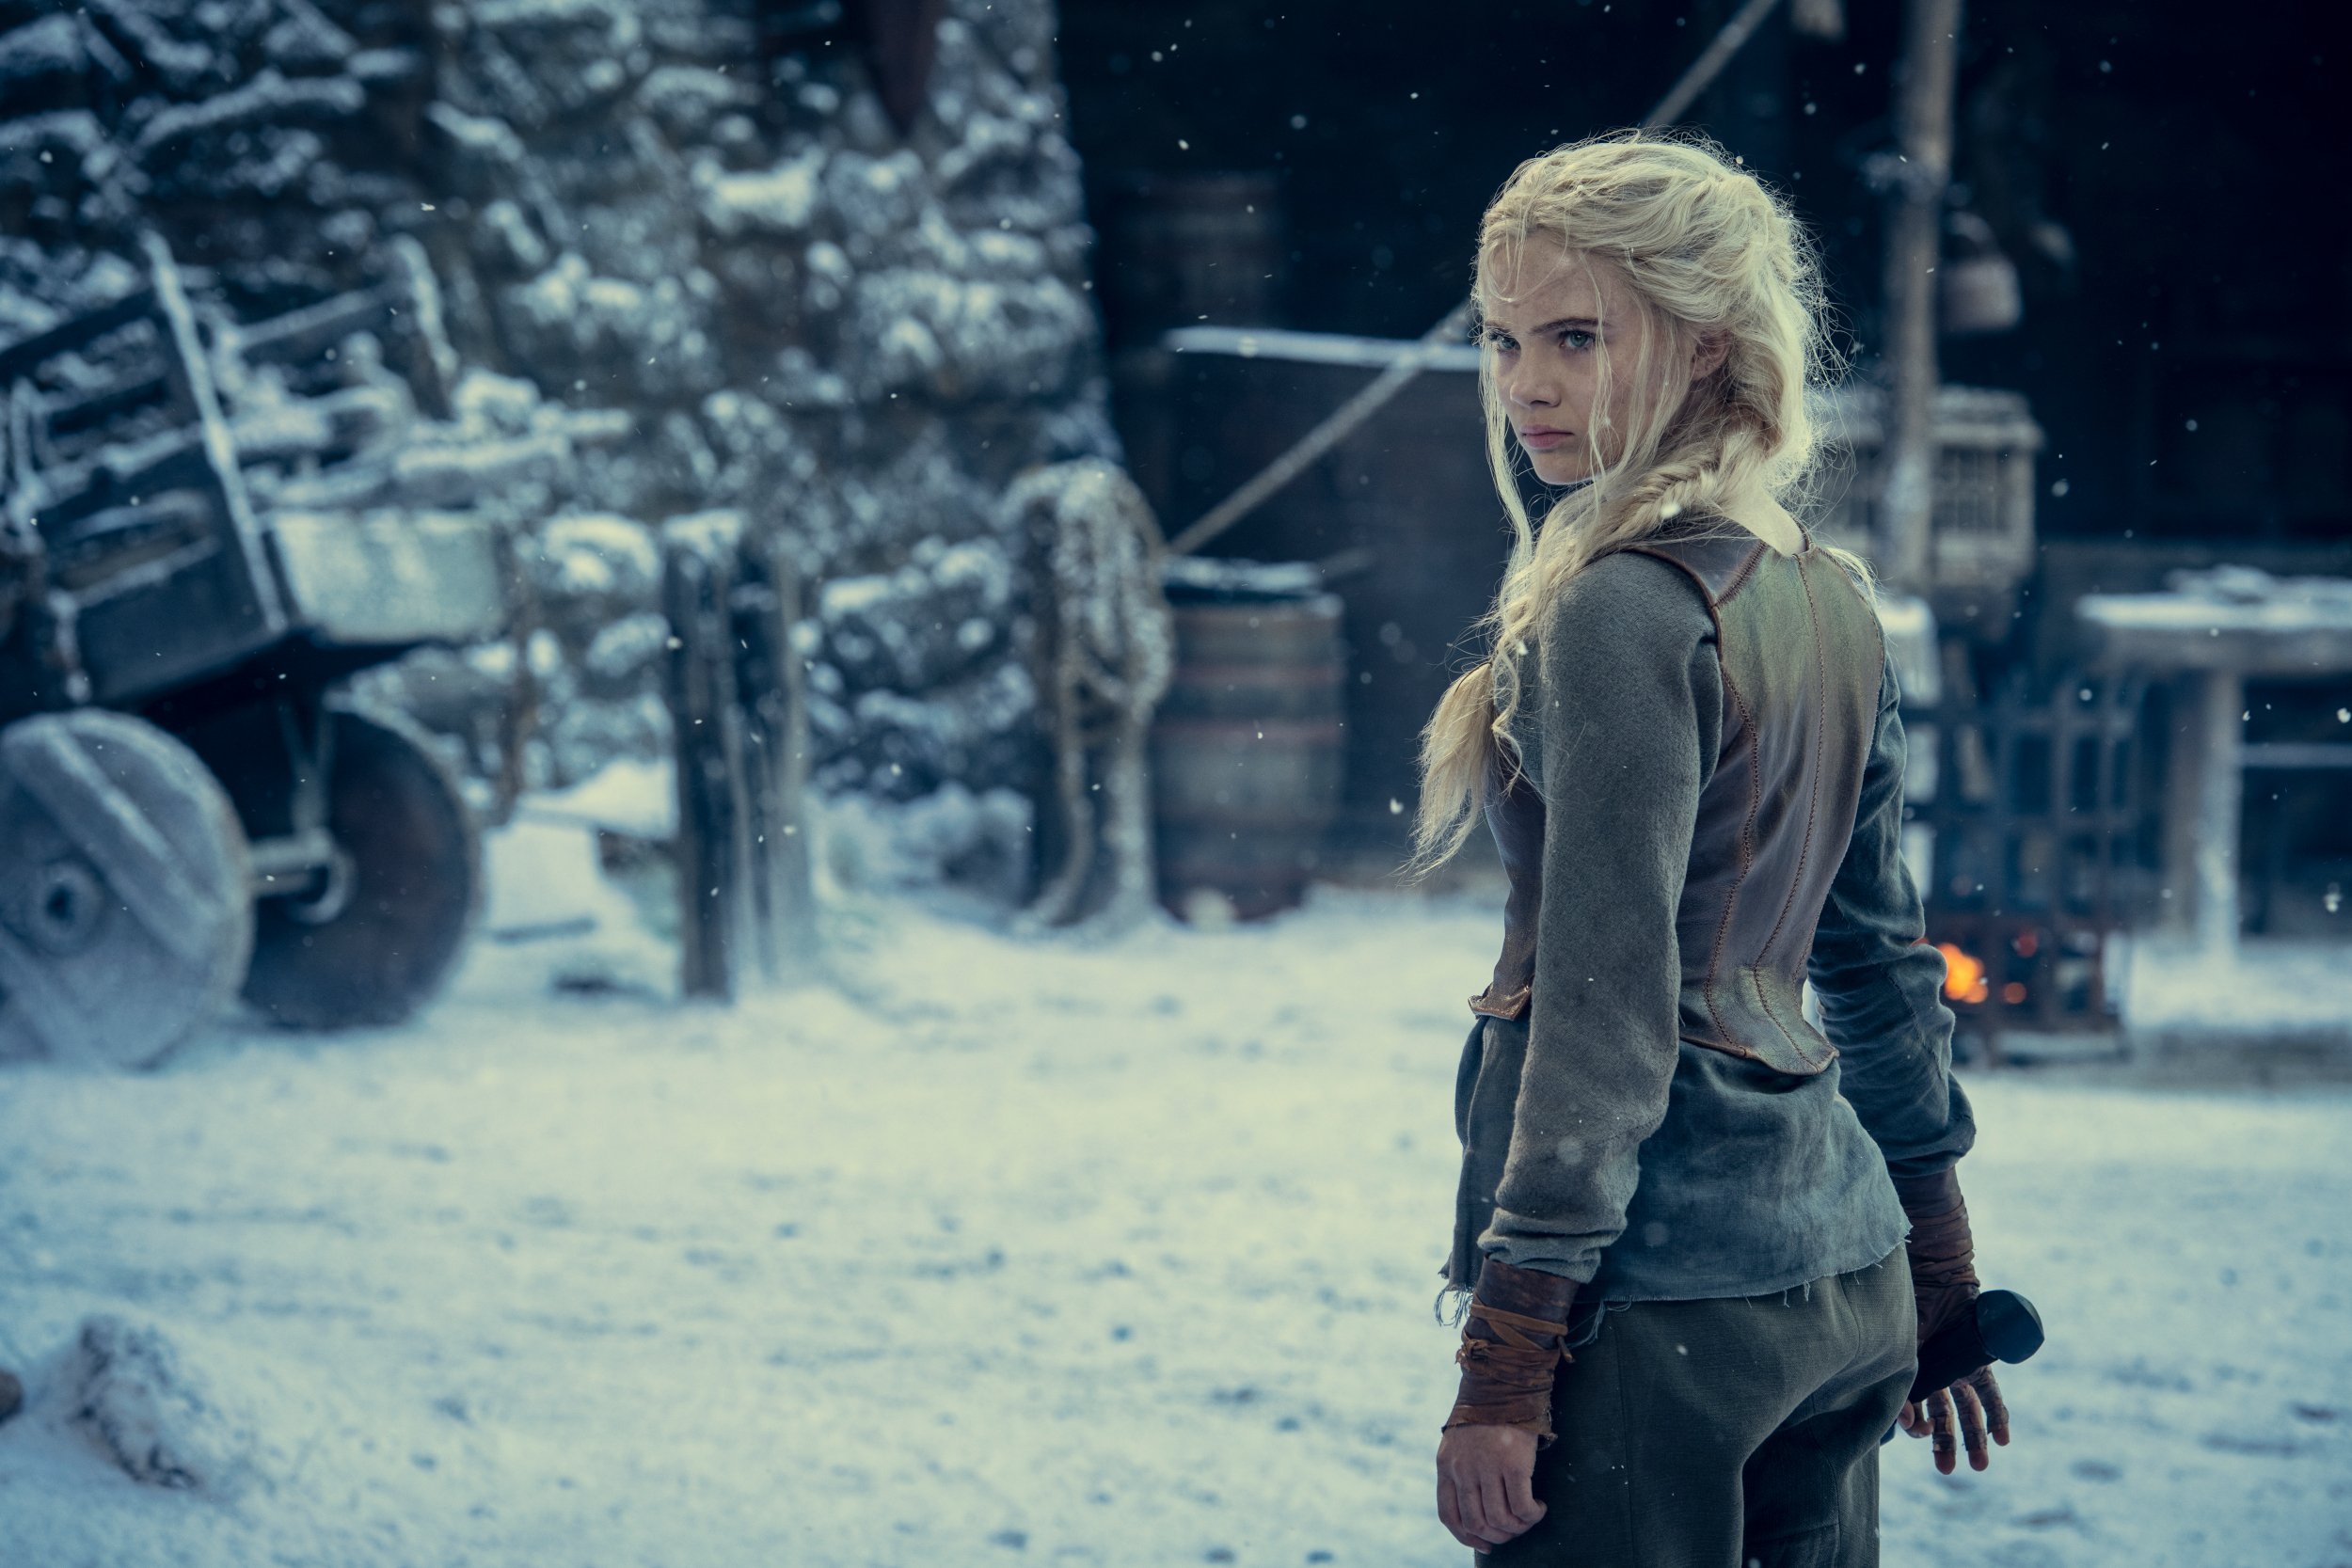 'The Witcher' star Freya Allen training as Ciri in Season 2